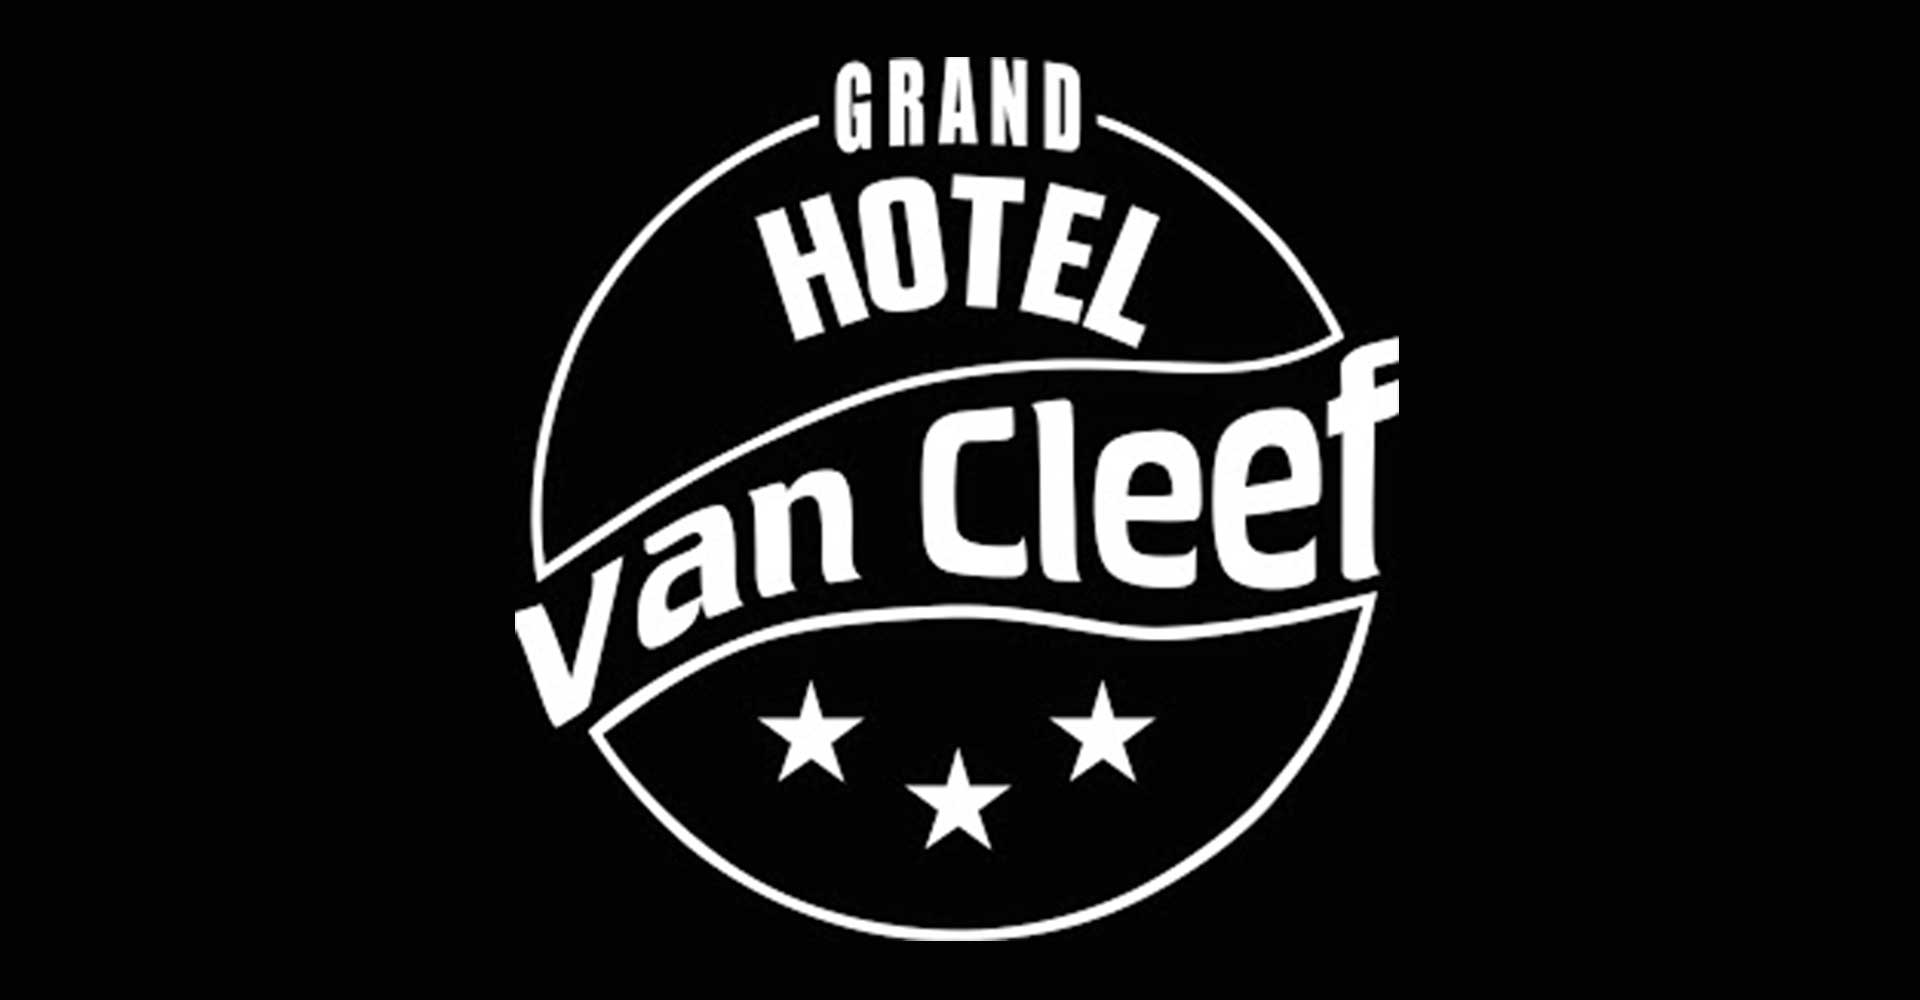 Grand Hotel Van Cleef - Musikmaschine